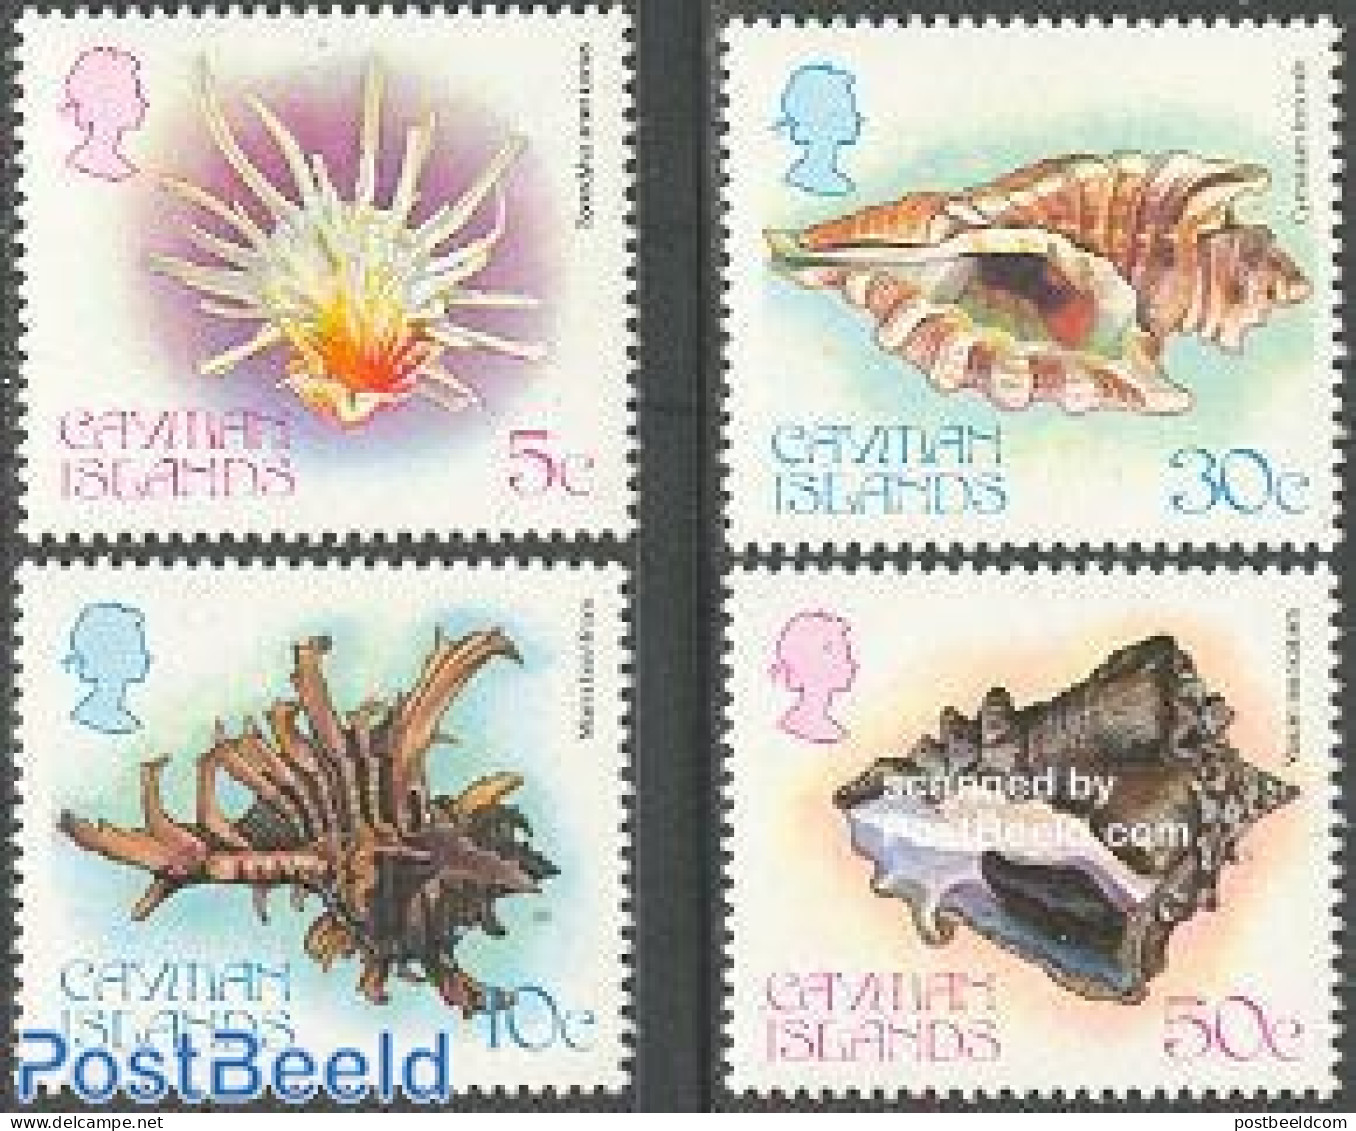 Cayman Islands 1980 Shells 4v, Mint NH, Nature - Shells & Crustaceans - Vie Marine